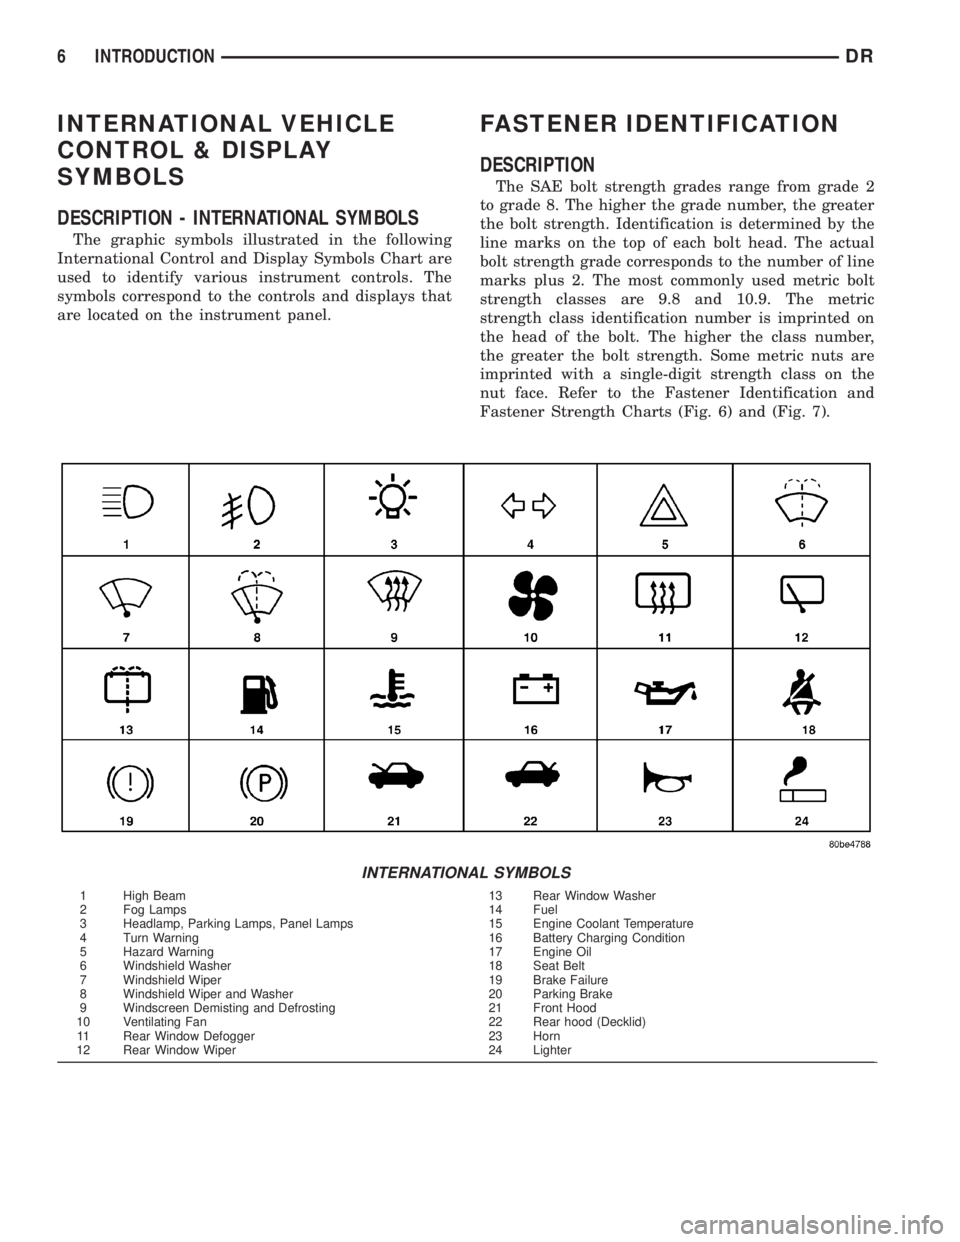 DODGE RAM 2003  Service Repair Manual INTERNATIONAL VEHICLE
CONTROL & DISPLAY
SYMBOLS
DESCRIPTION - INTERNATIONAL SYMBOLS
The graphic symbols illustrated in the following
International Control and Display Symbols Chart are
used to identif